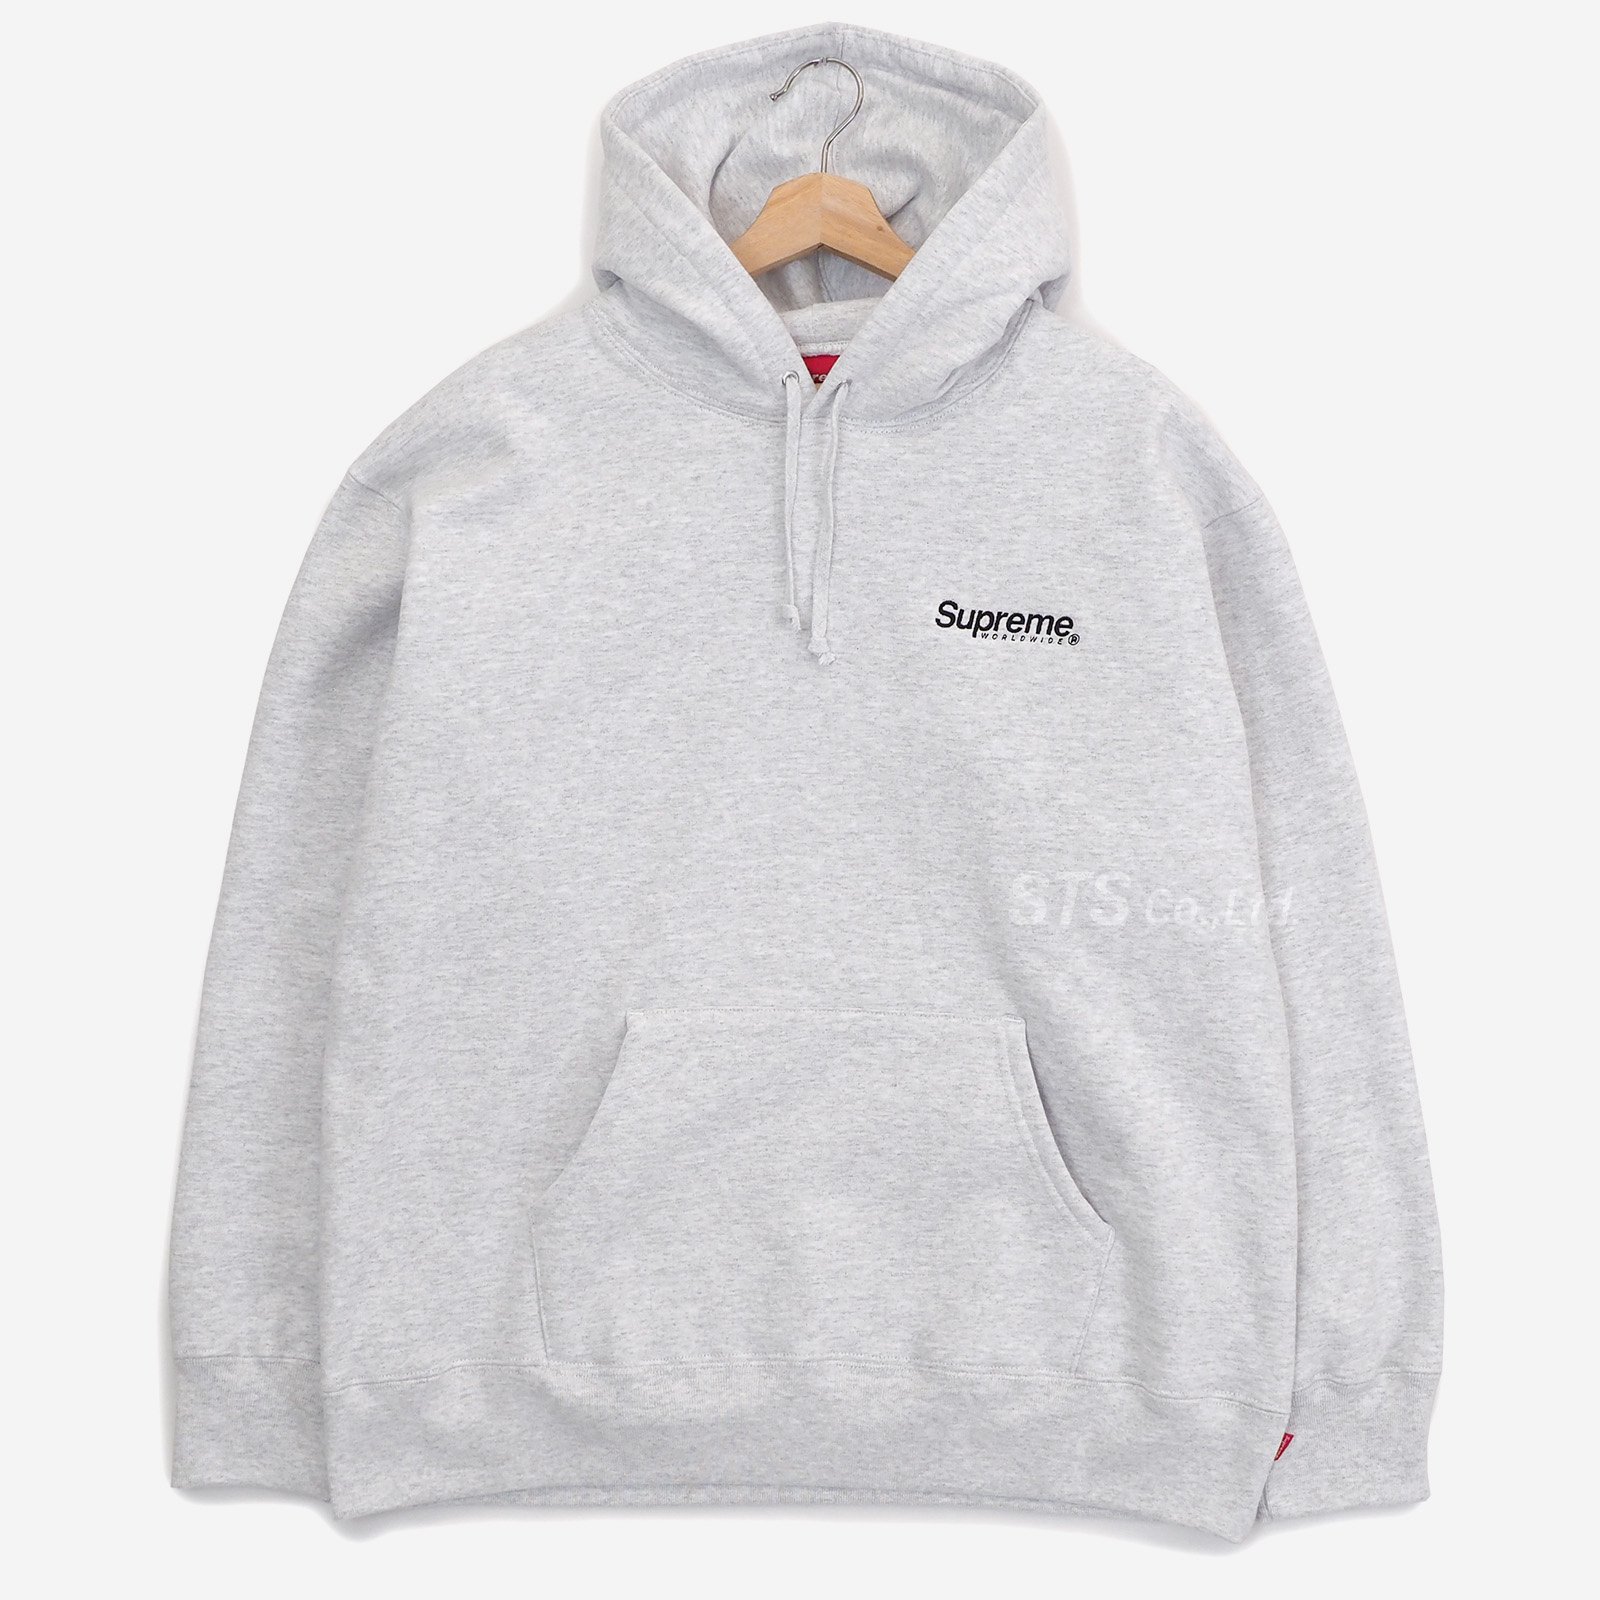 SUPREME Worldwide Hooded Sweatshirt 品質証明書付き silver-star.co.il